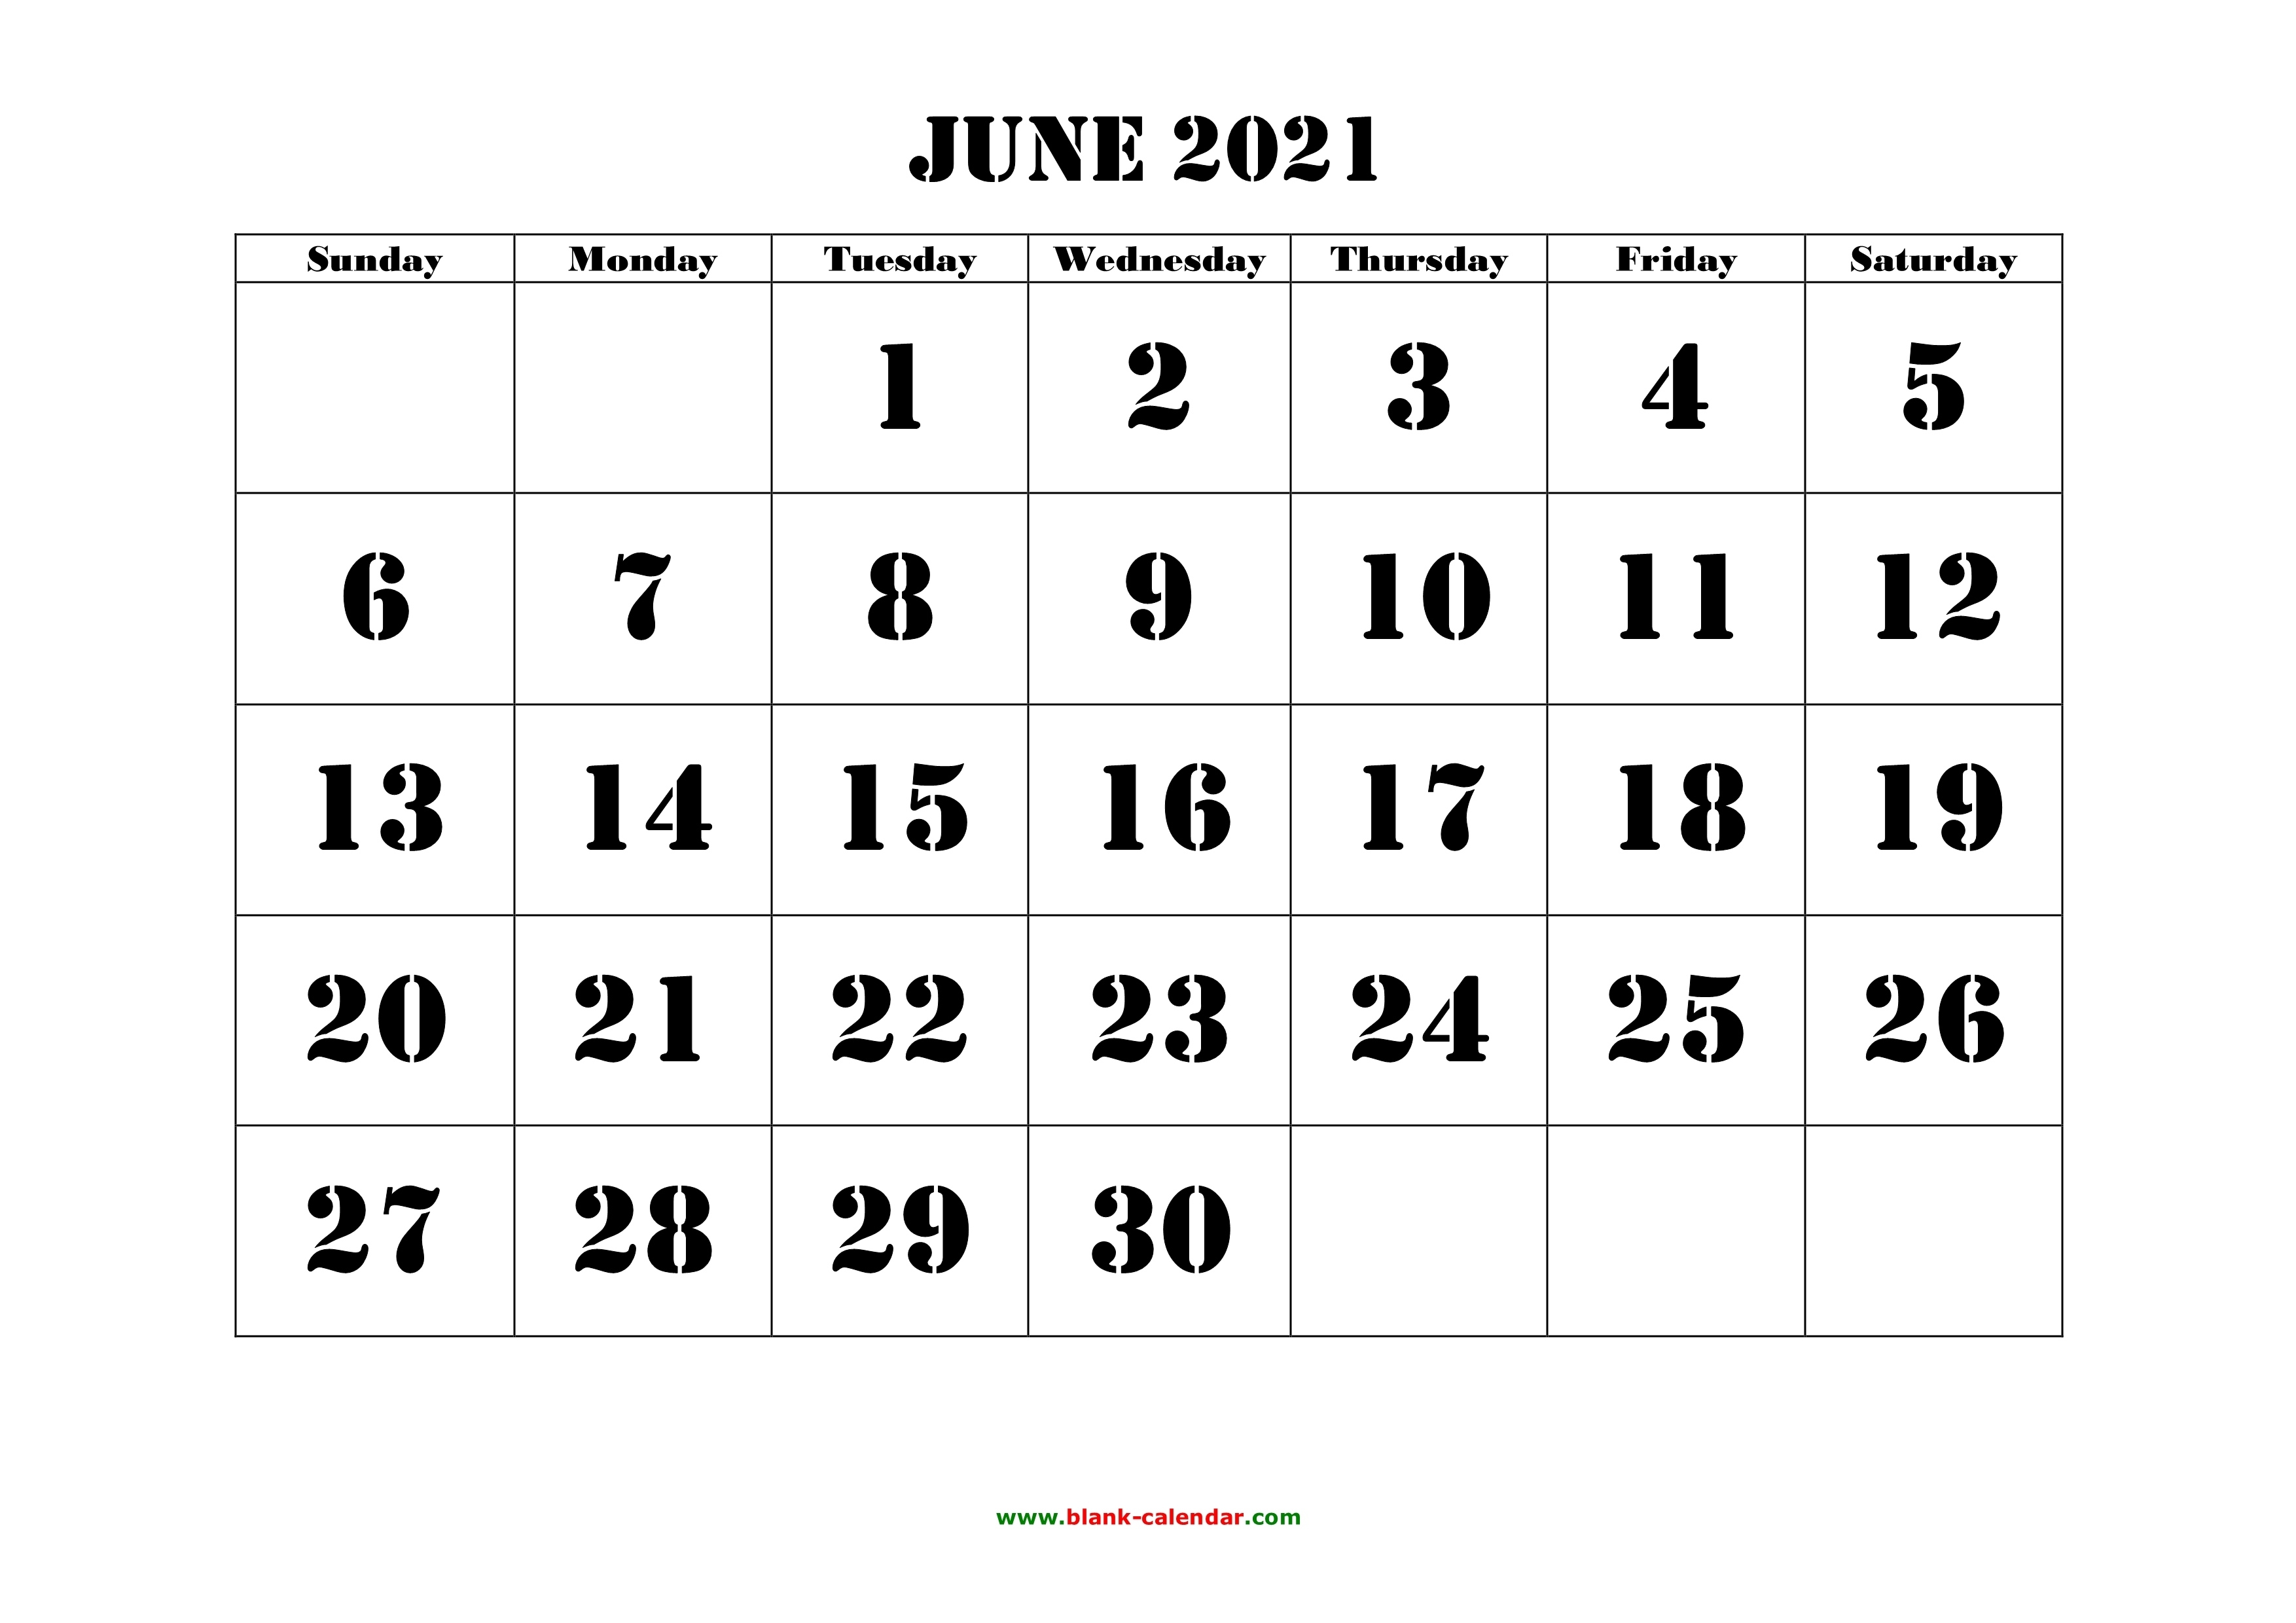 Holiday Calendar 2021 June | Calendar Page June 2021 Calendar With Holidays